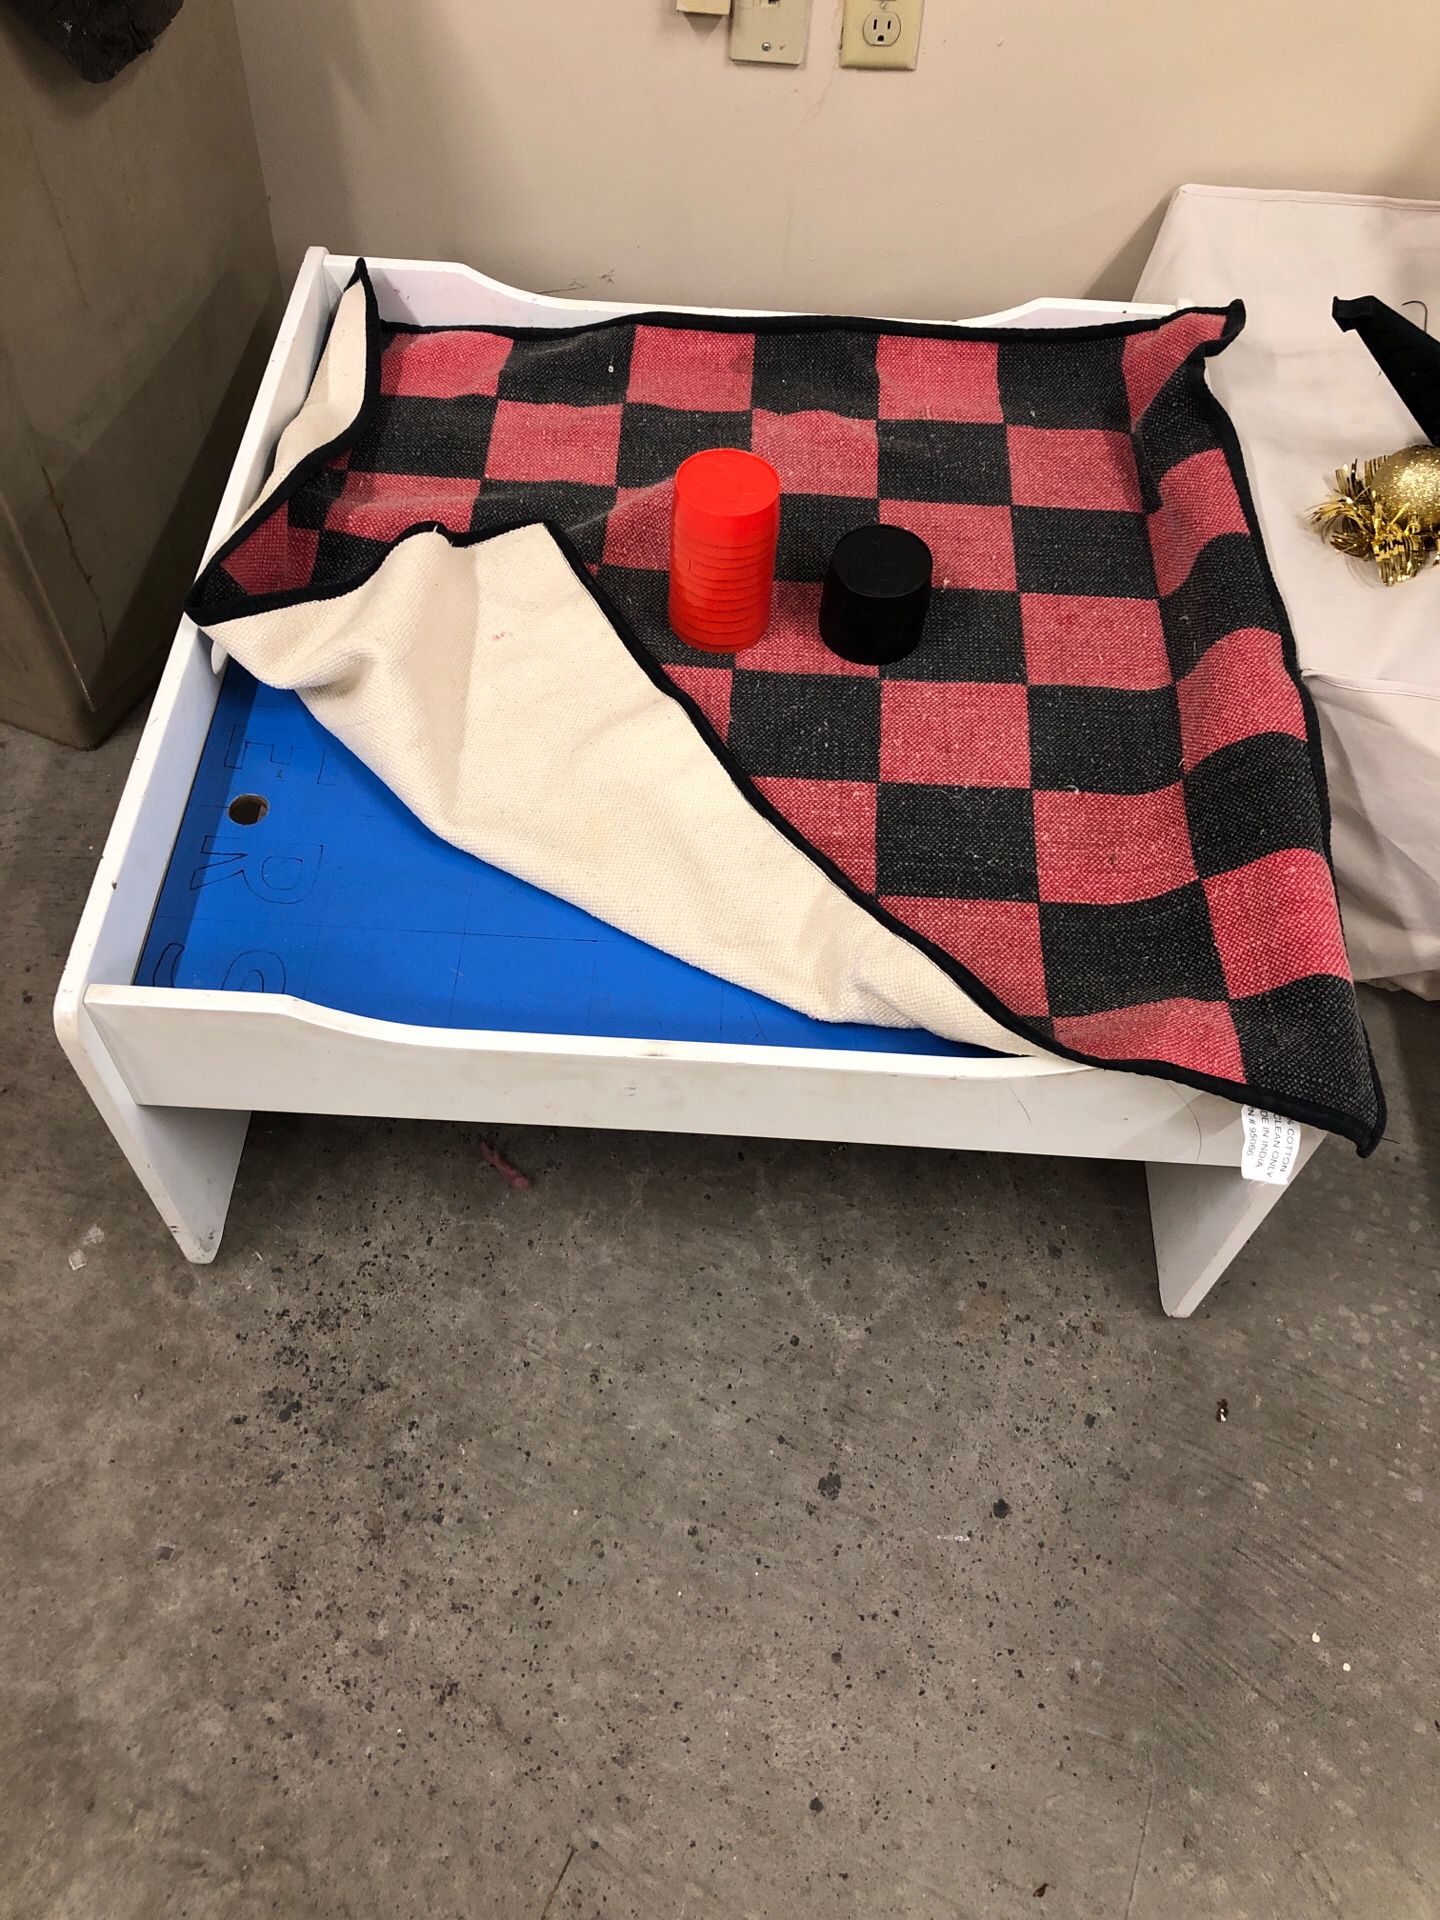 Child’s play table/ checker board